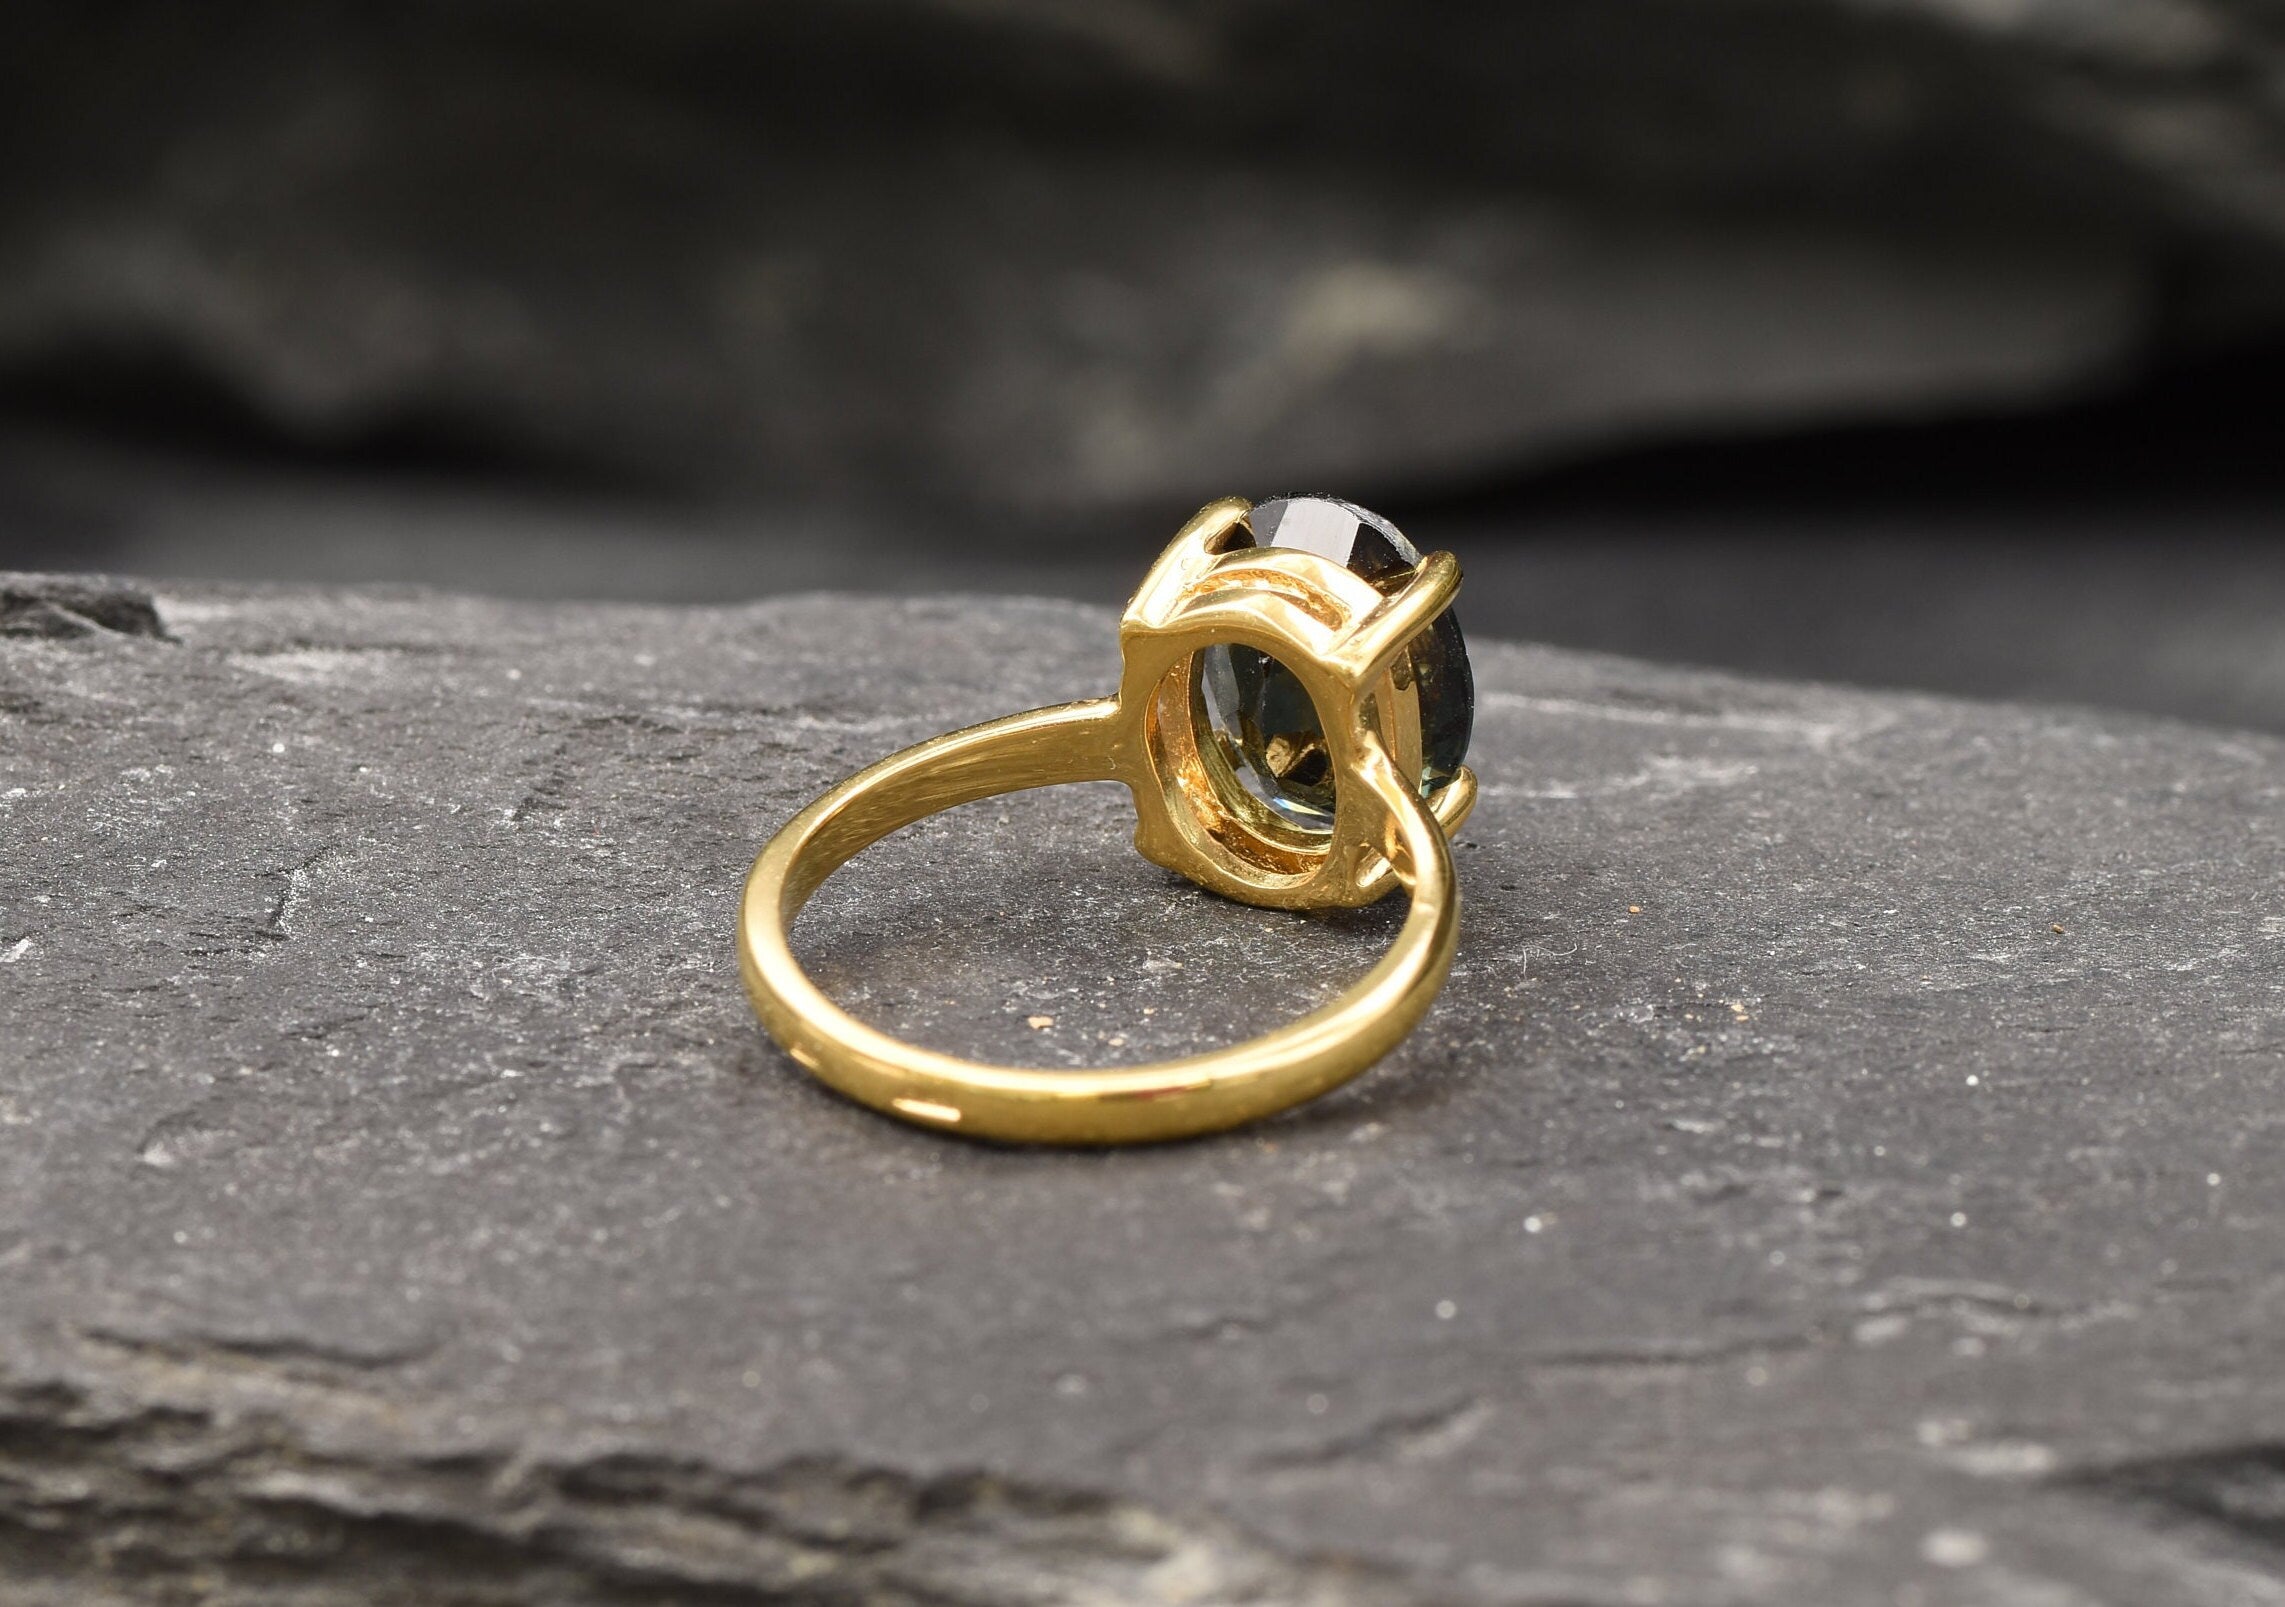 Oval Dark Green Diamond Proposal Ring in Gold Vermeil